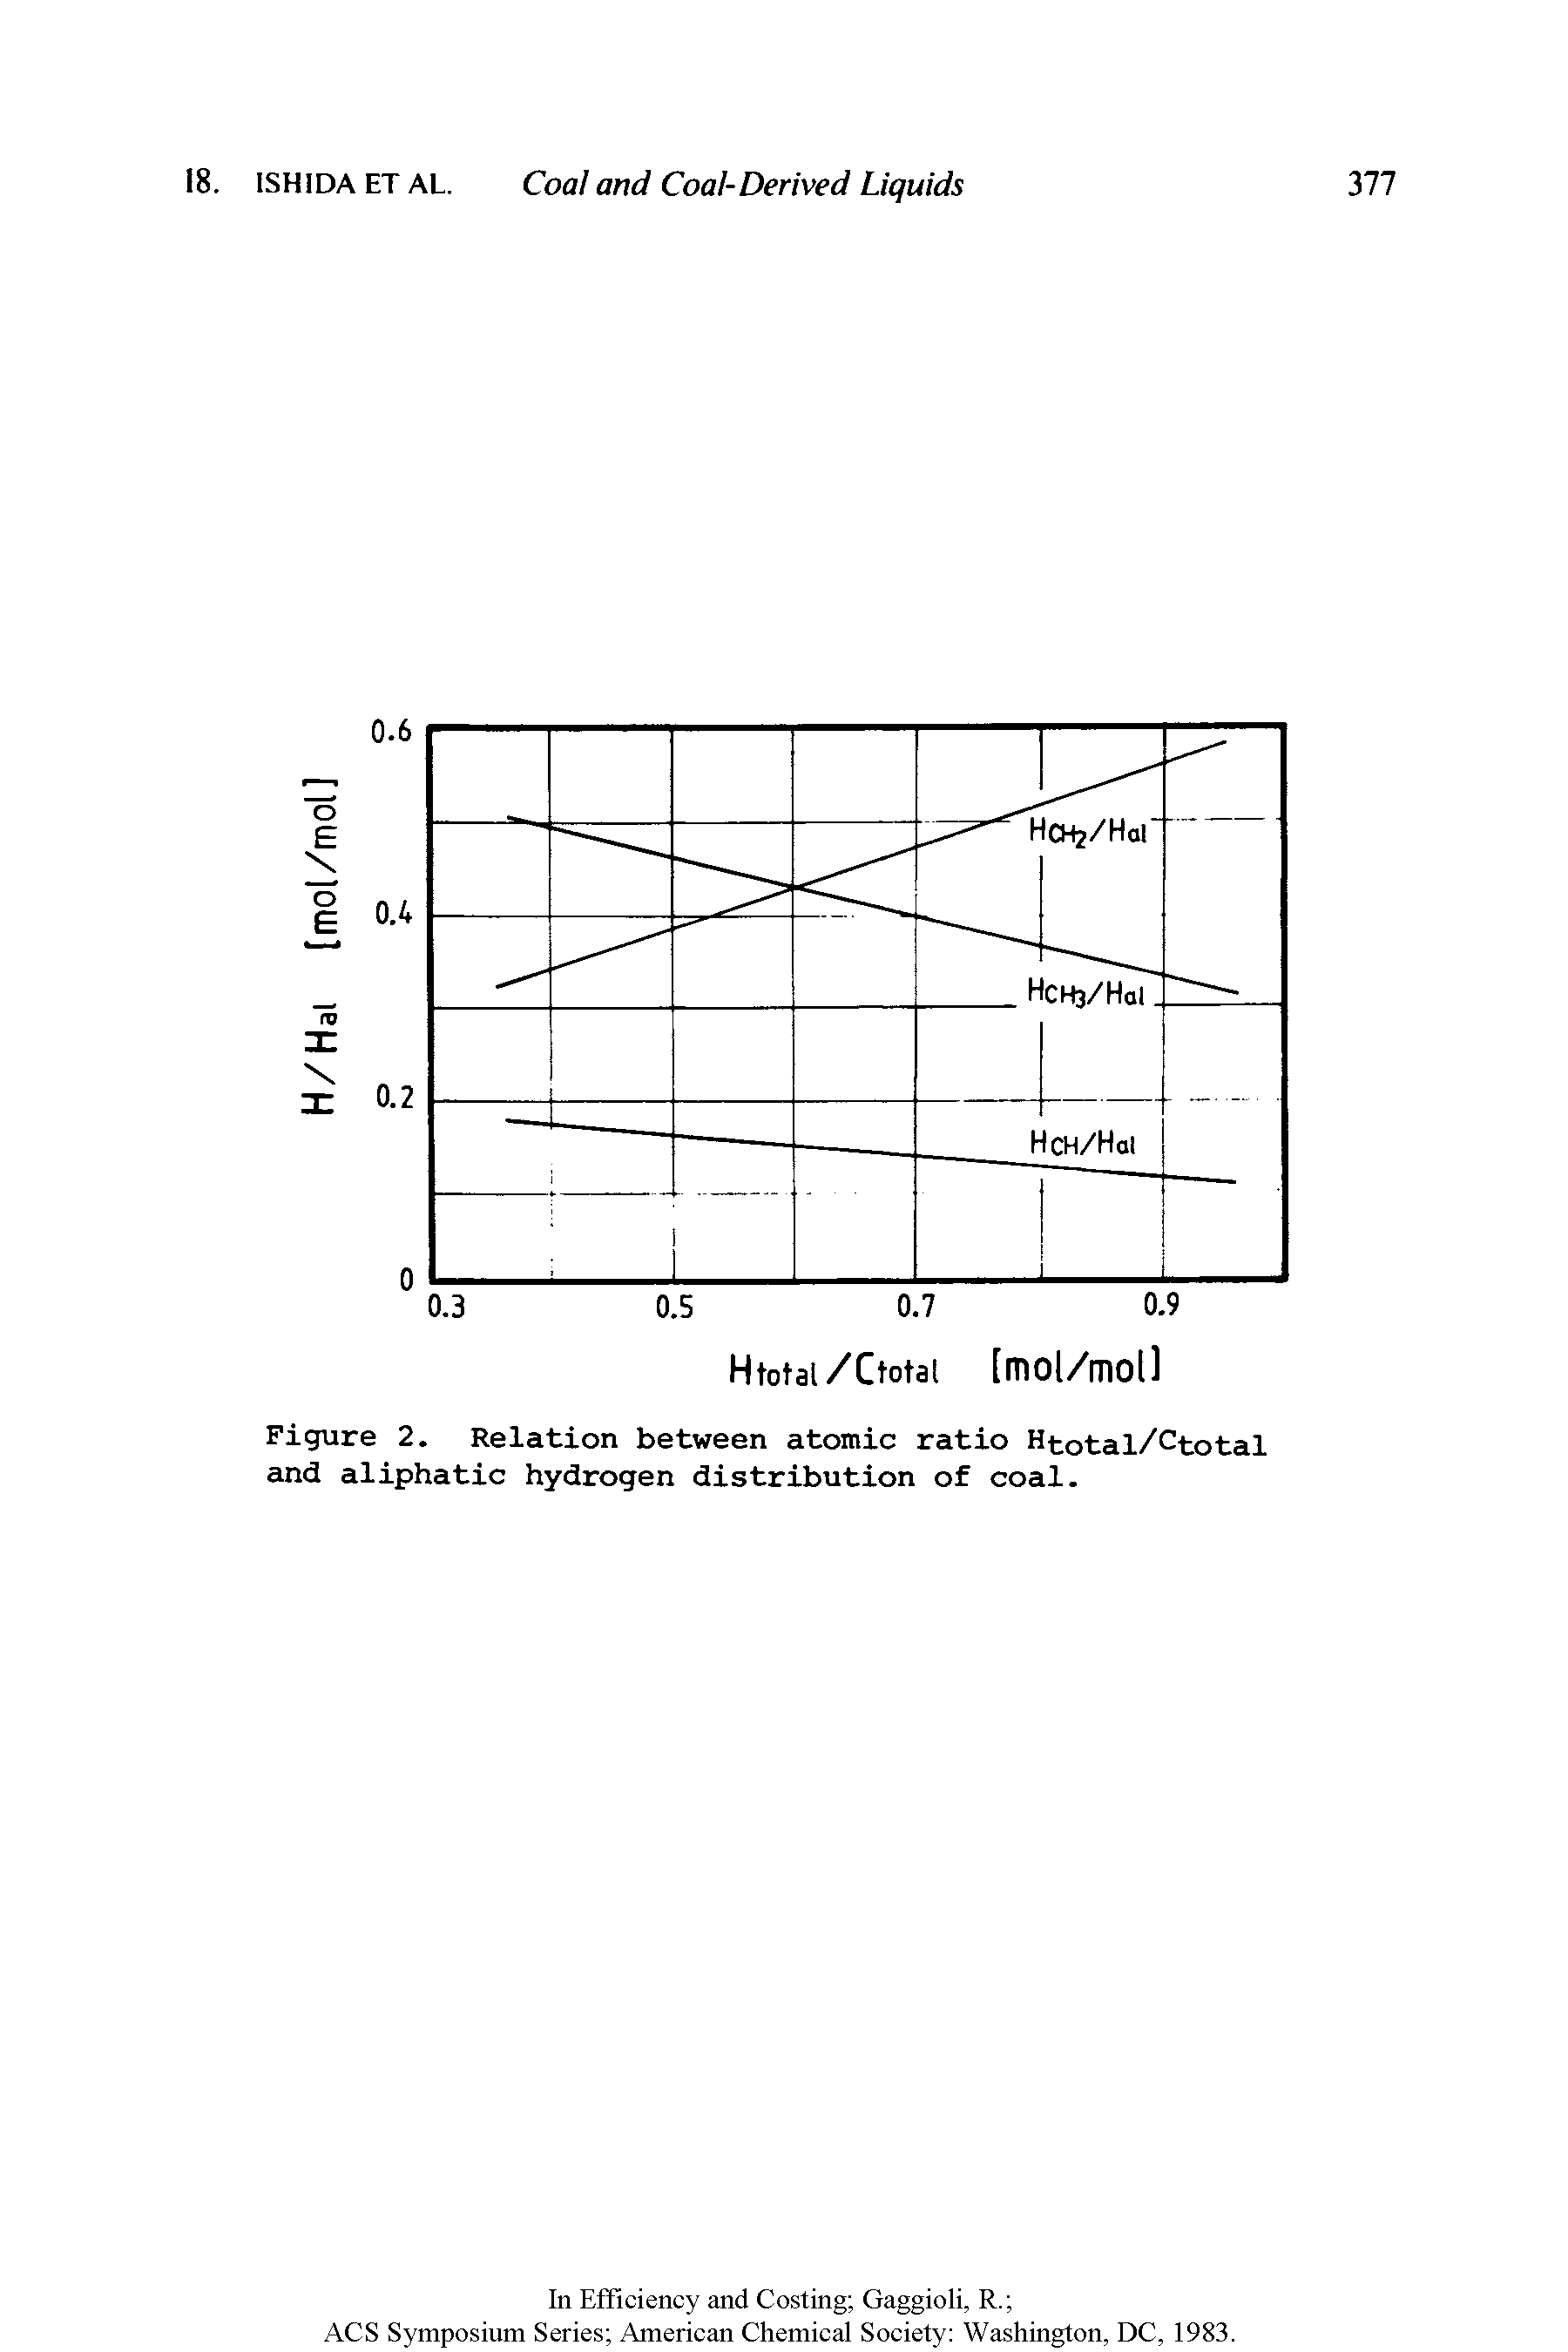 Figure 2. Relation between atomic ratio Htotal/Ctotal and aliphatic hydrogen distribution of coal.